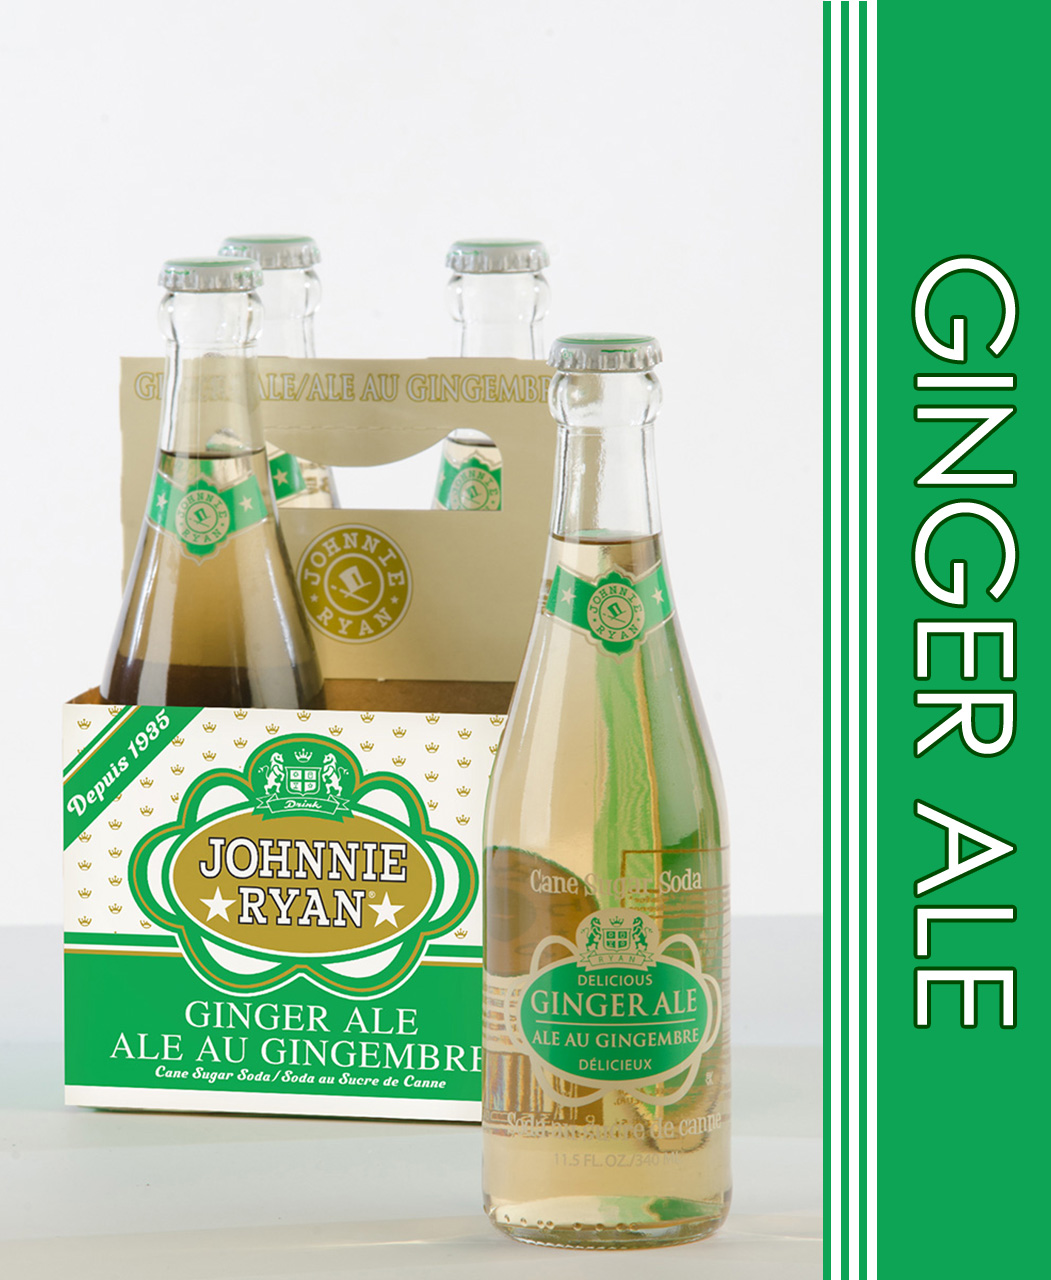 Ginger Ale cane sugar soda from Johnnie Ryan beverages in Niagara Falls, NY.